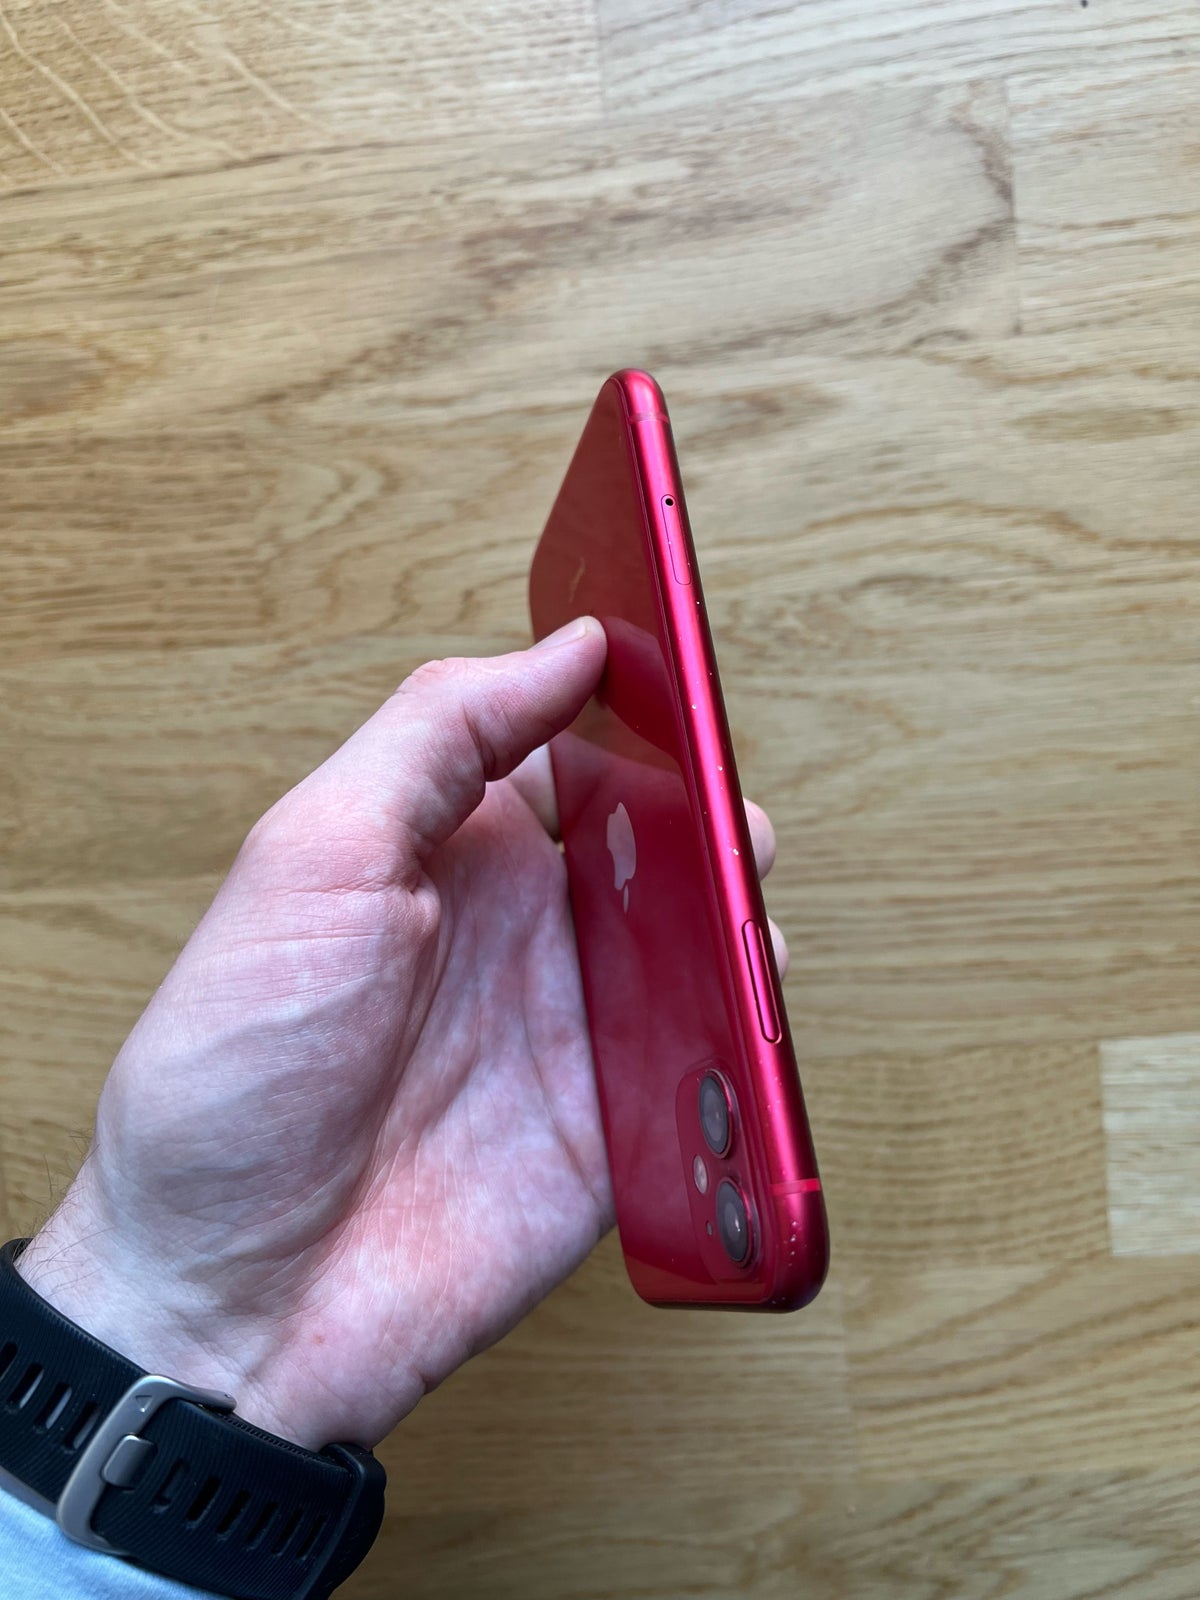 iPhone 11, 64 GB, rød